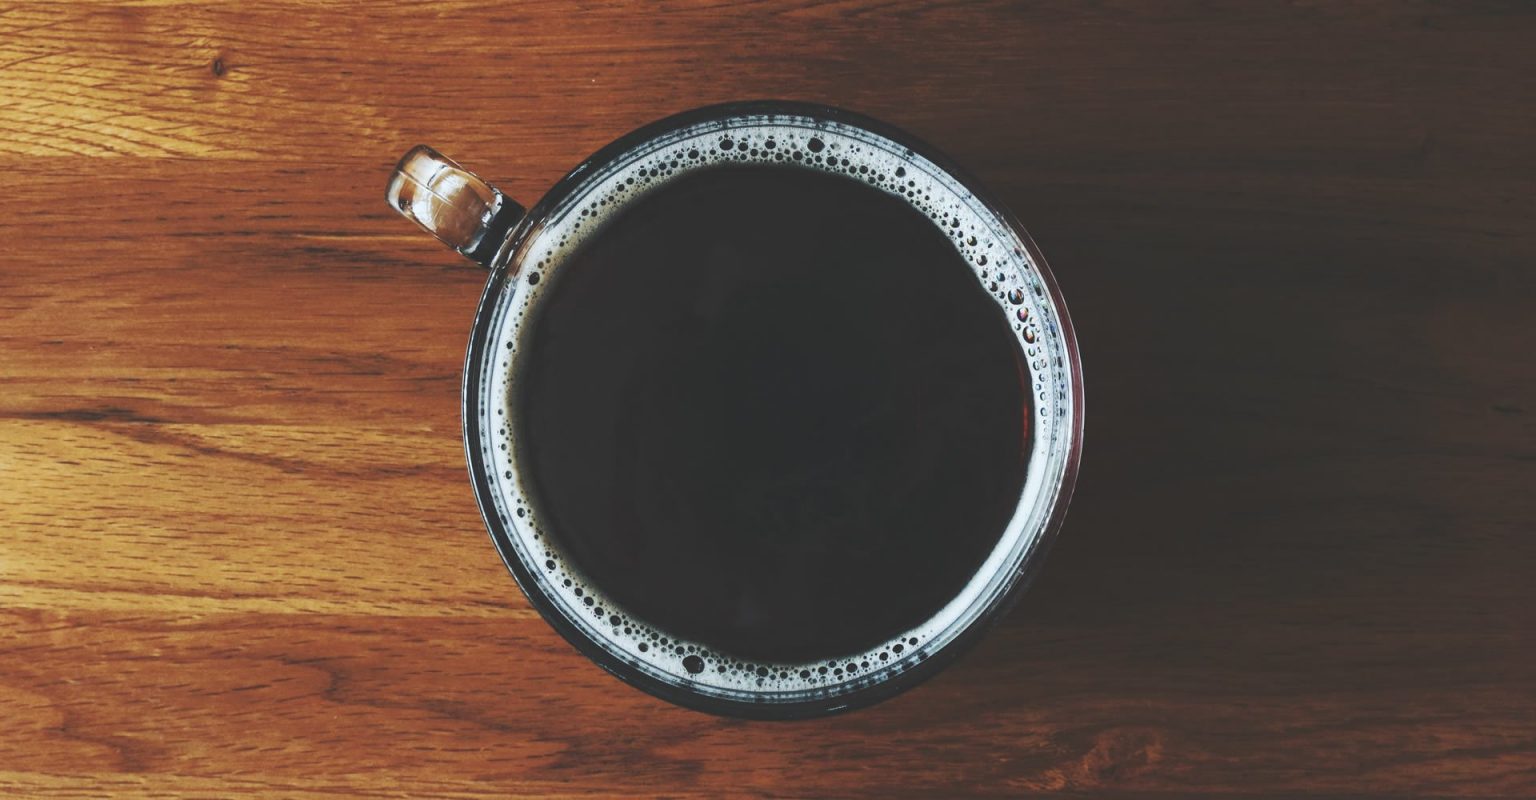 Benefits of Coffee and Tea